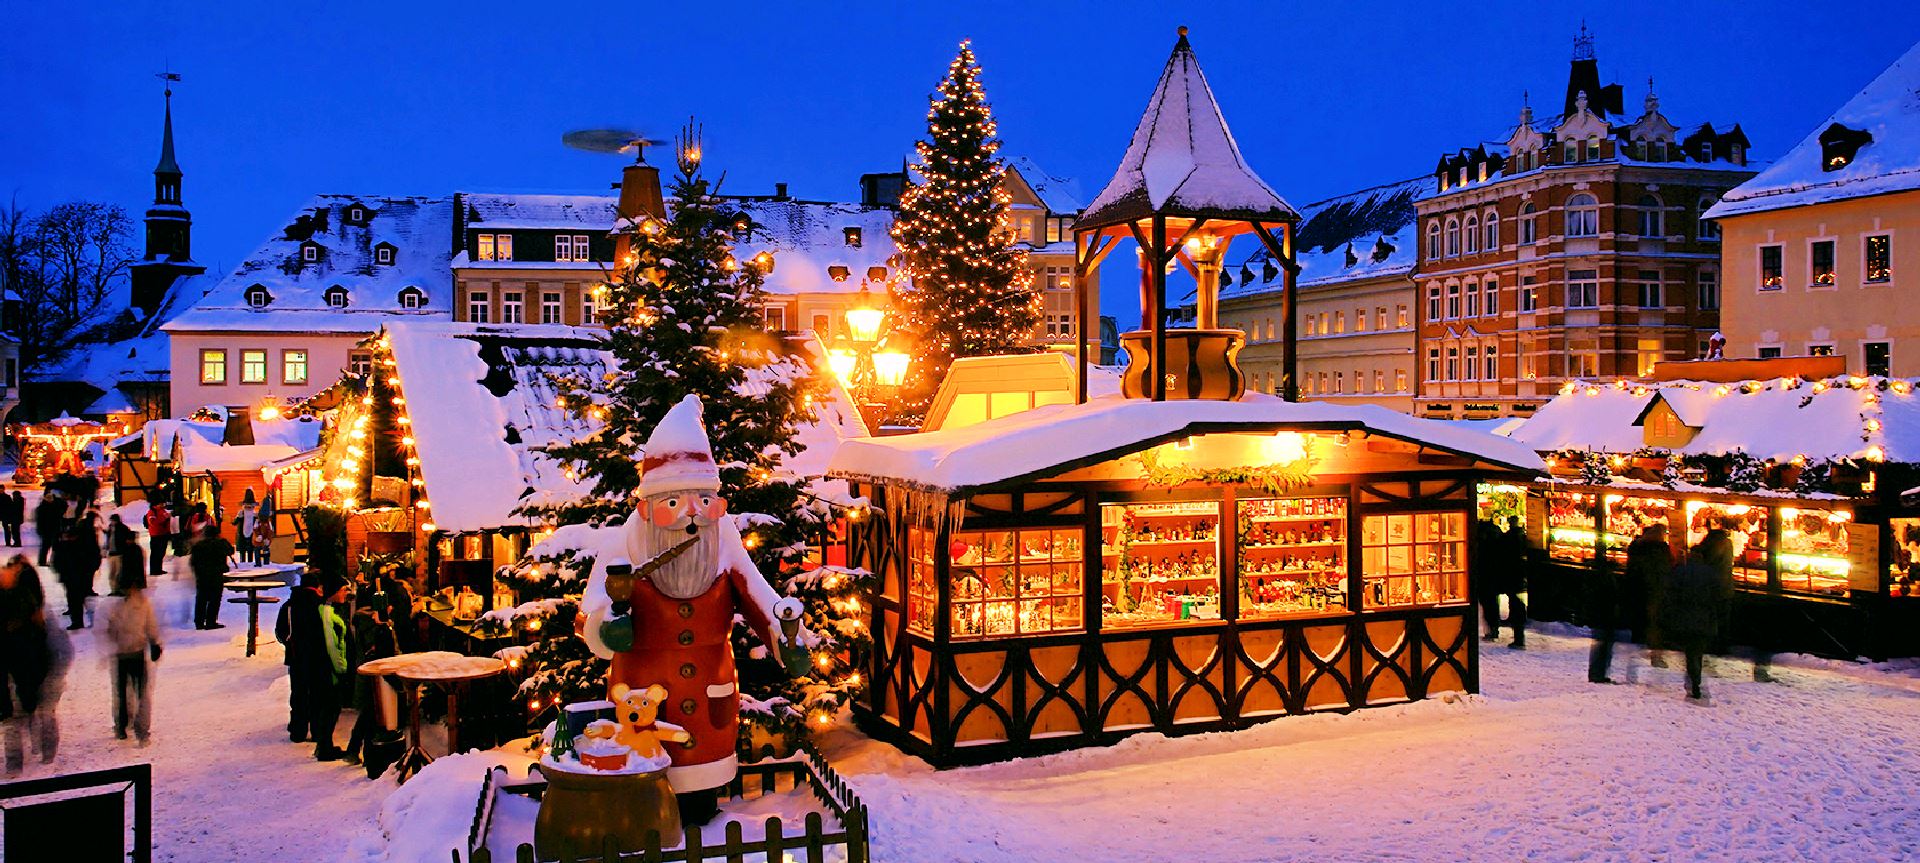 Krakow Christmas Markets - Antique Apartments - Old Town Krakow 3